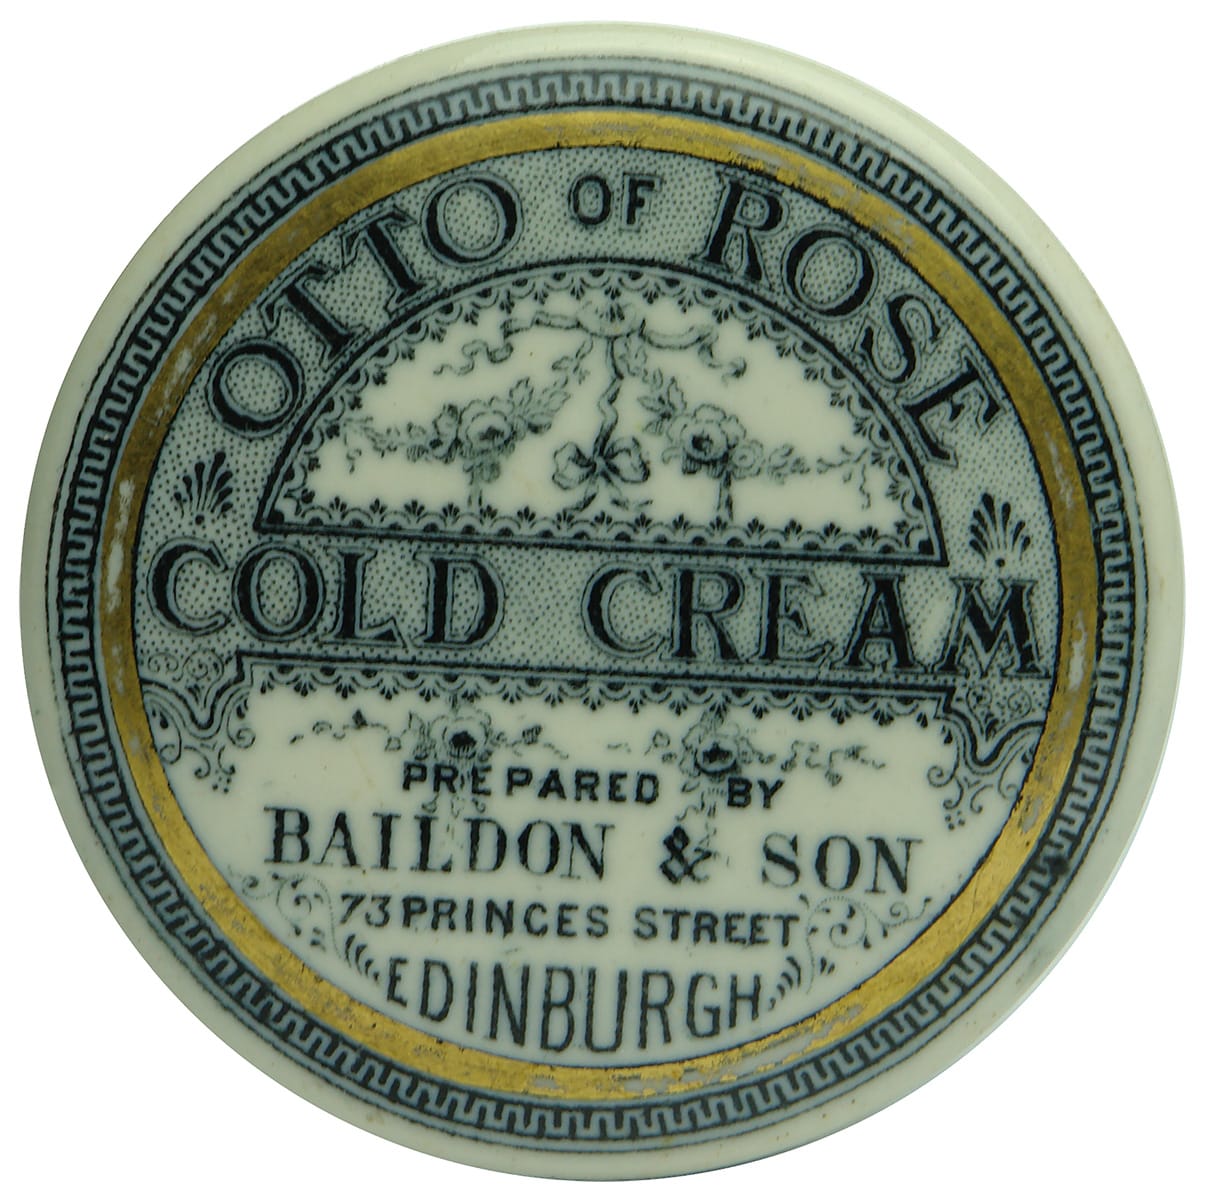 Otto of Rose Cold Cream Baildon Edinburgh Pot Lid